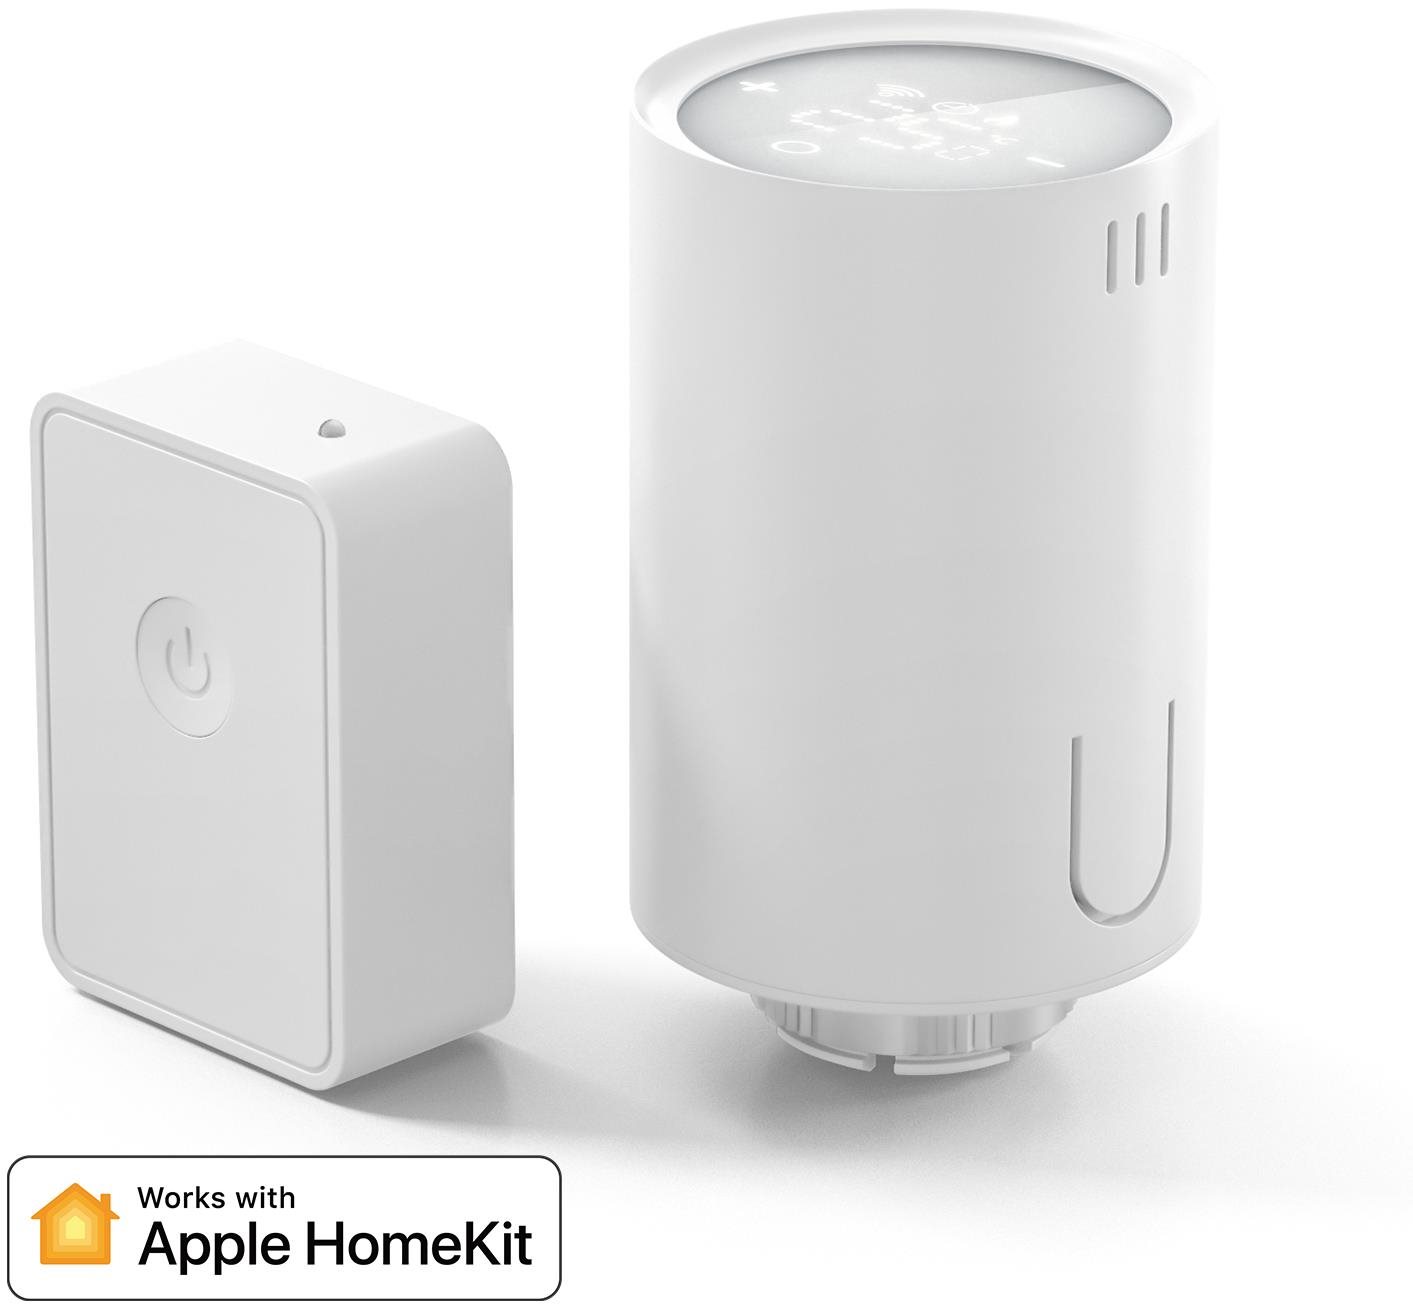 Termosztátfej Meross Smart Thermostat Valve Starter Kit Apple HomeKit